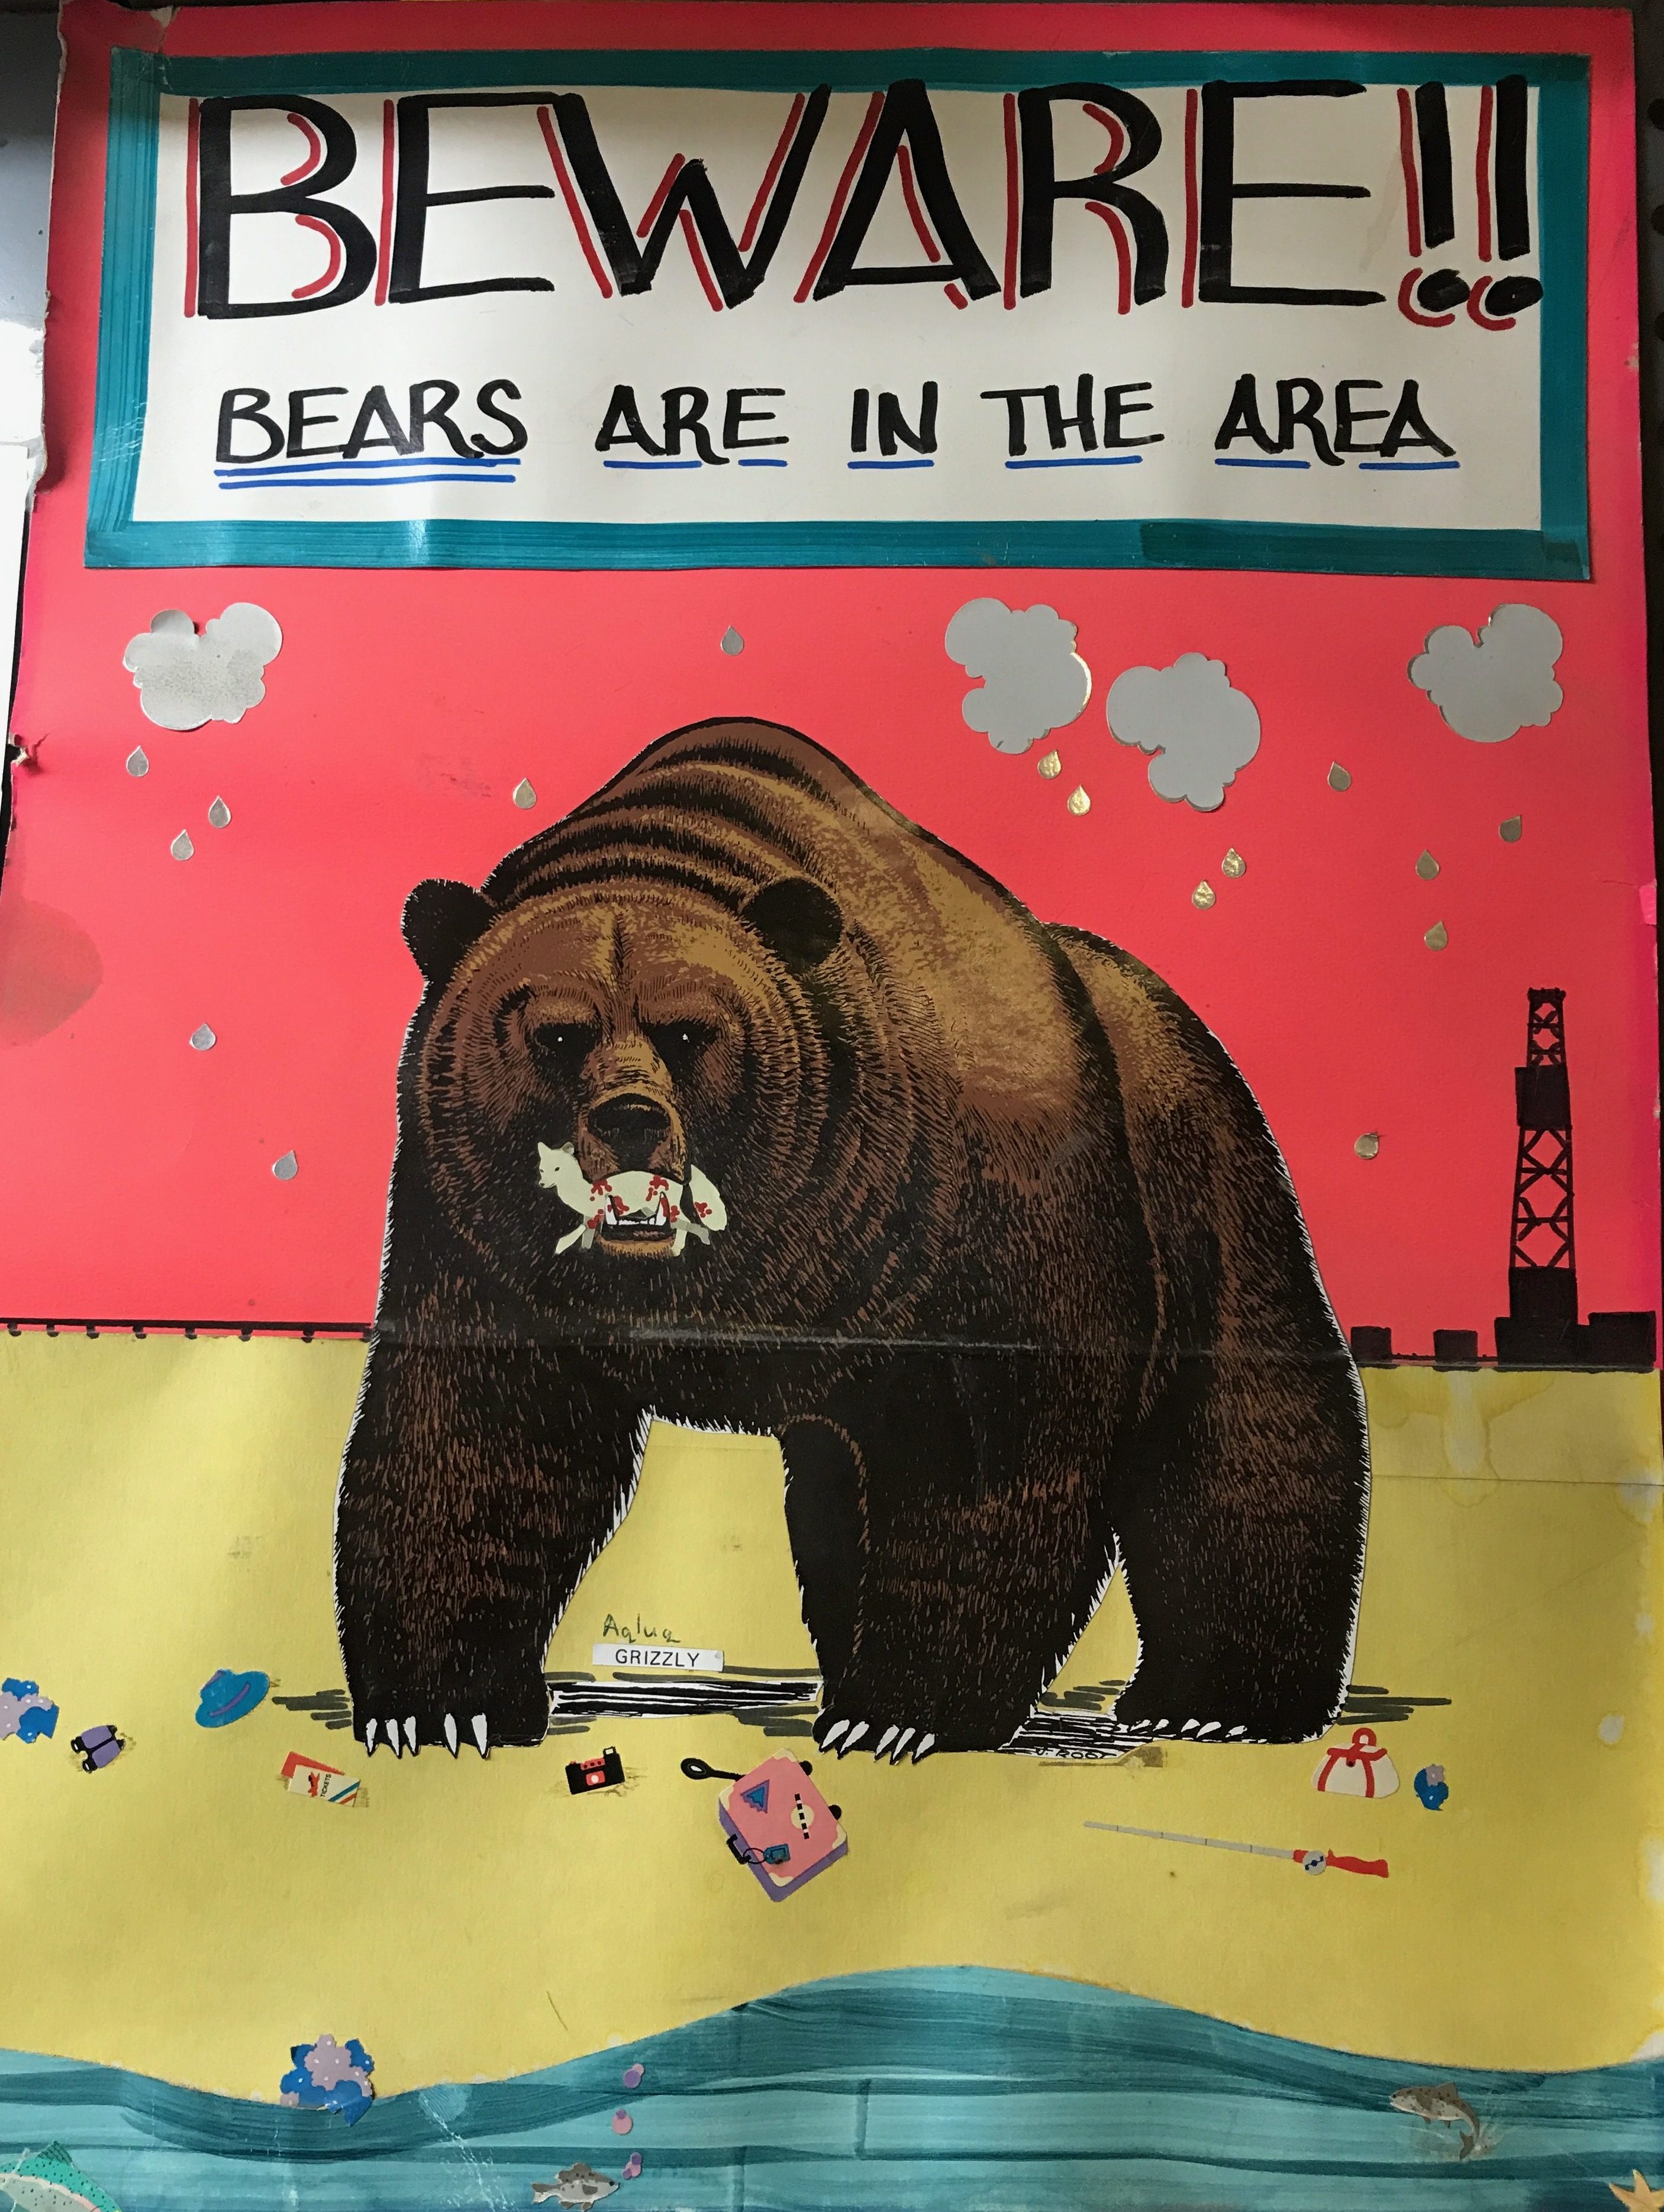 Bear Aware Campaign, Prudhoe Bay, Alaska